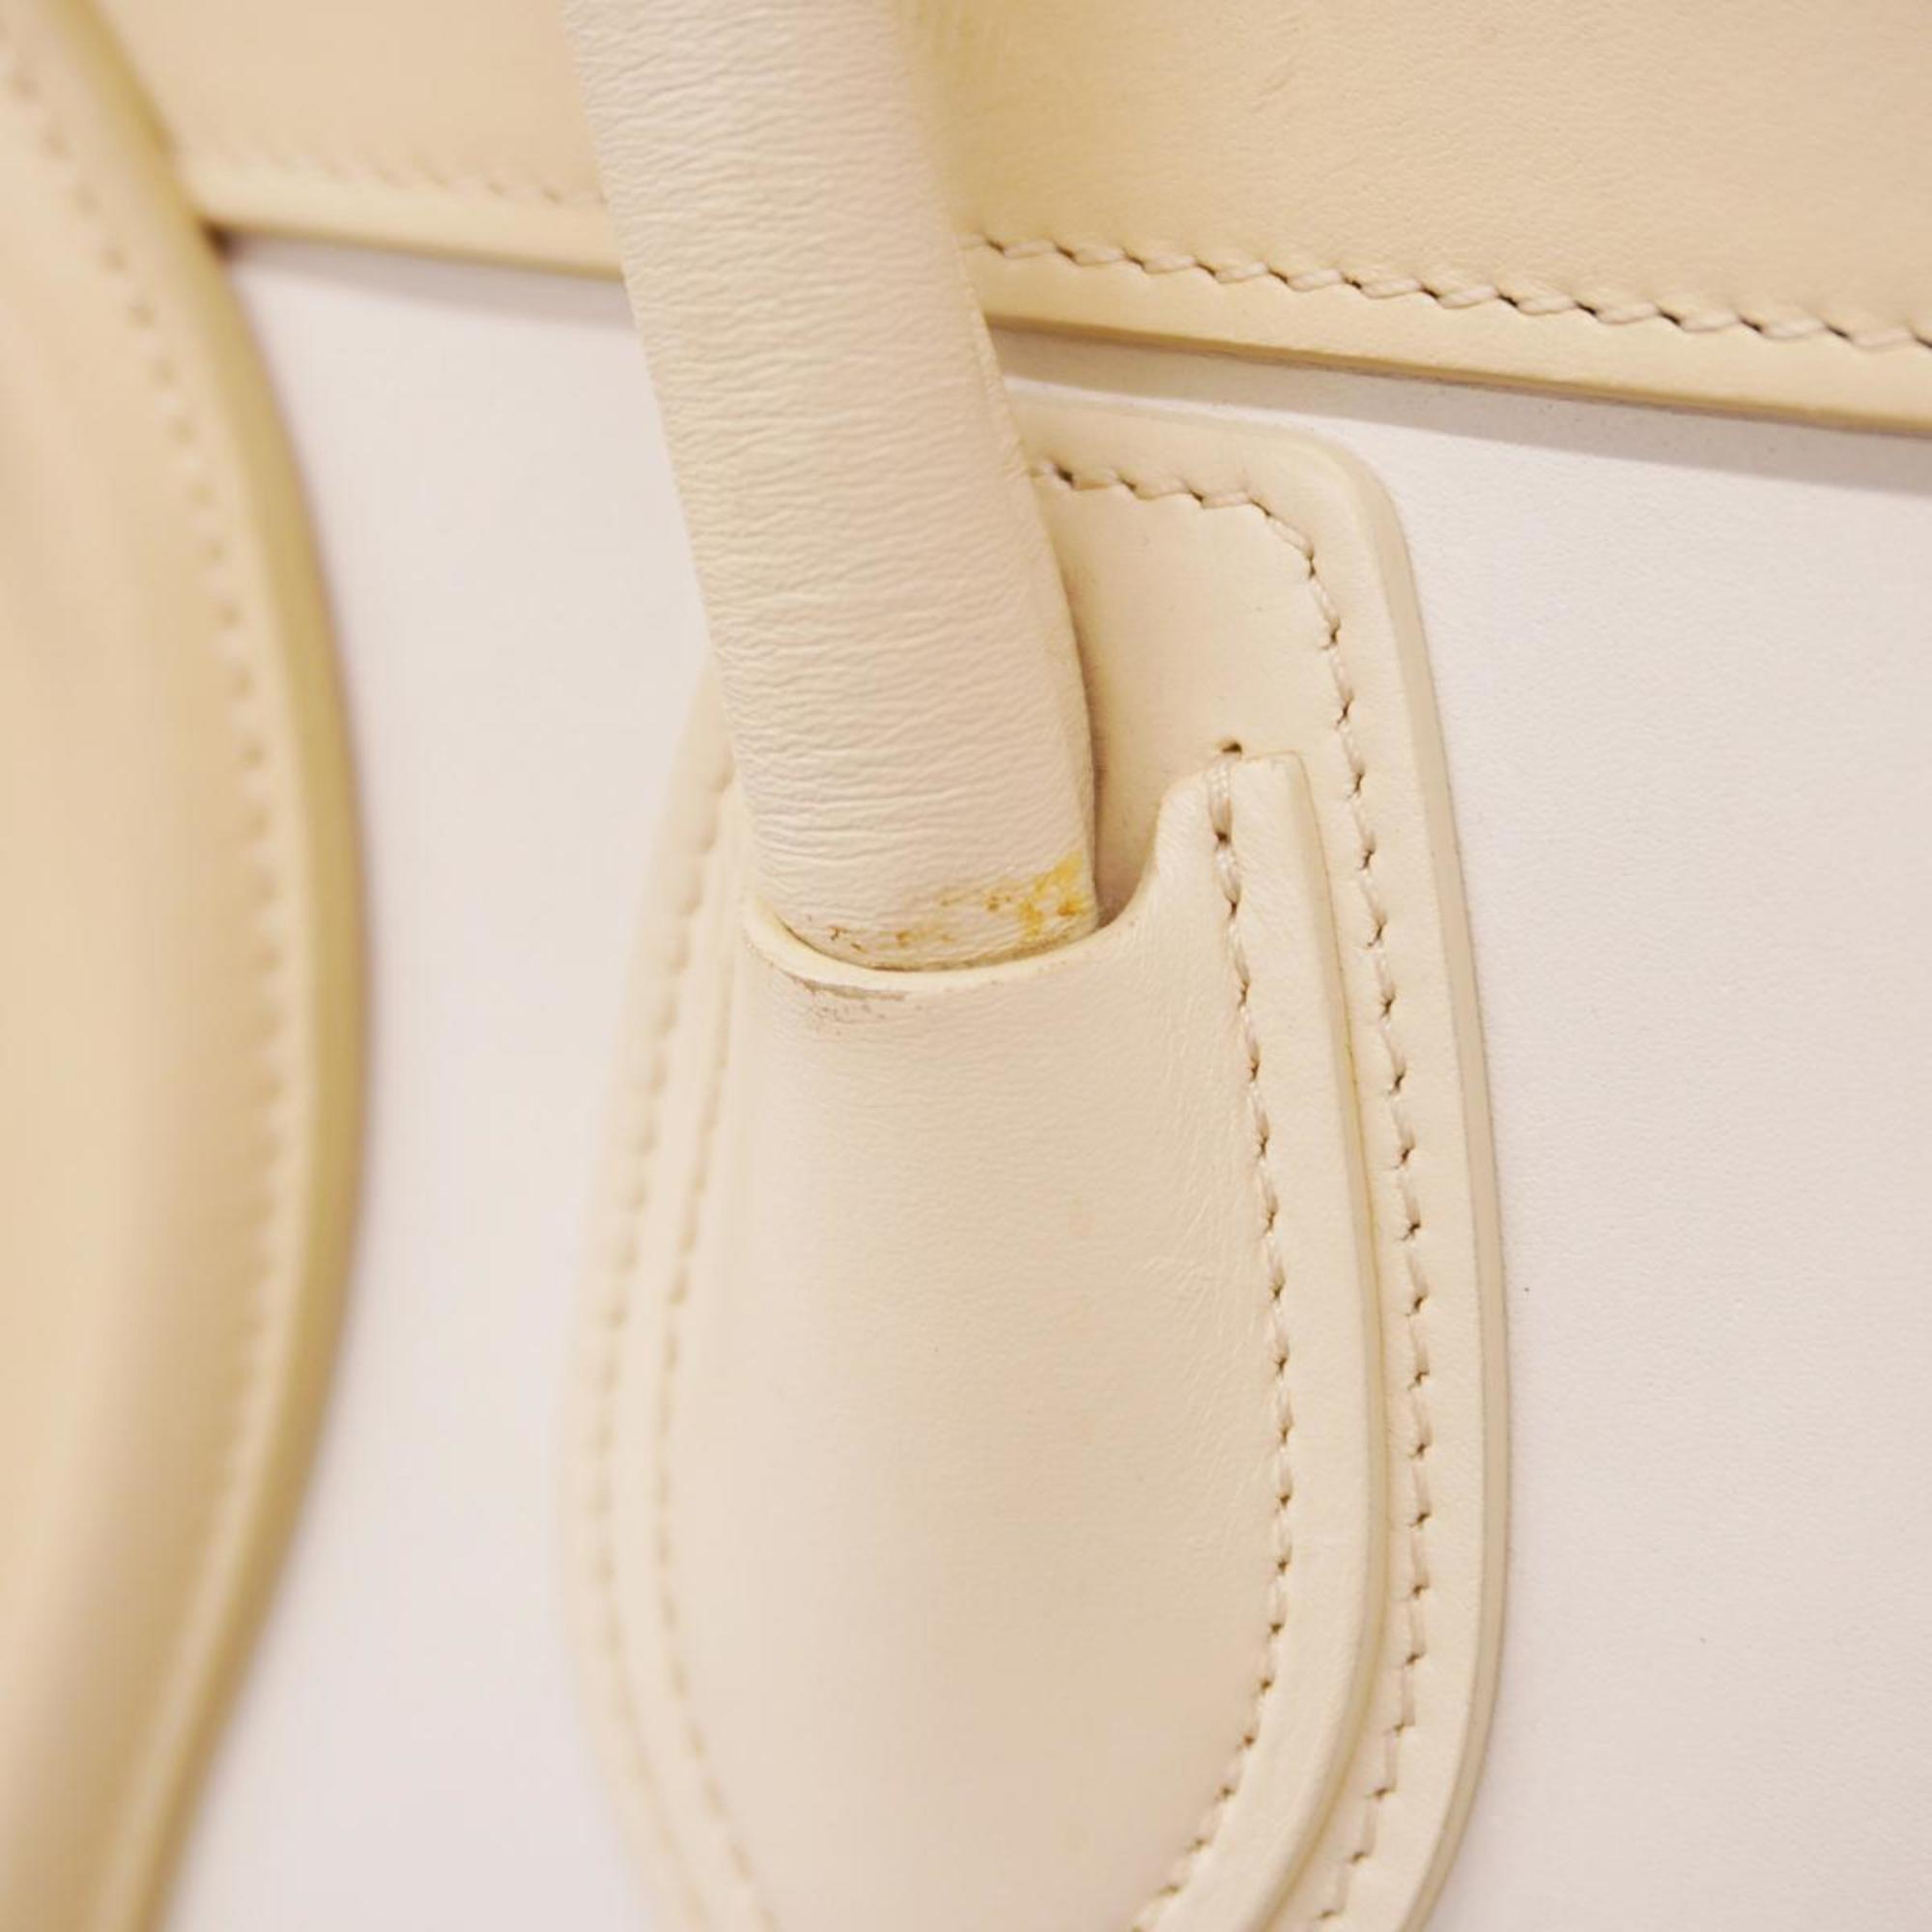 Celine handbag luggage micro shopper nylon canvas leather ivory